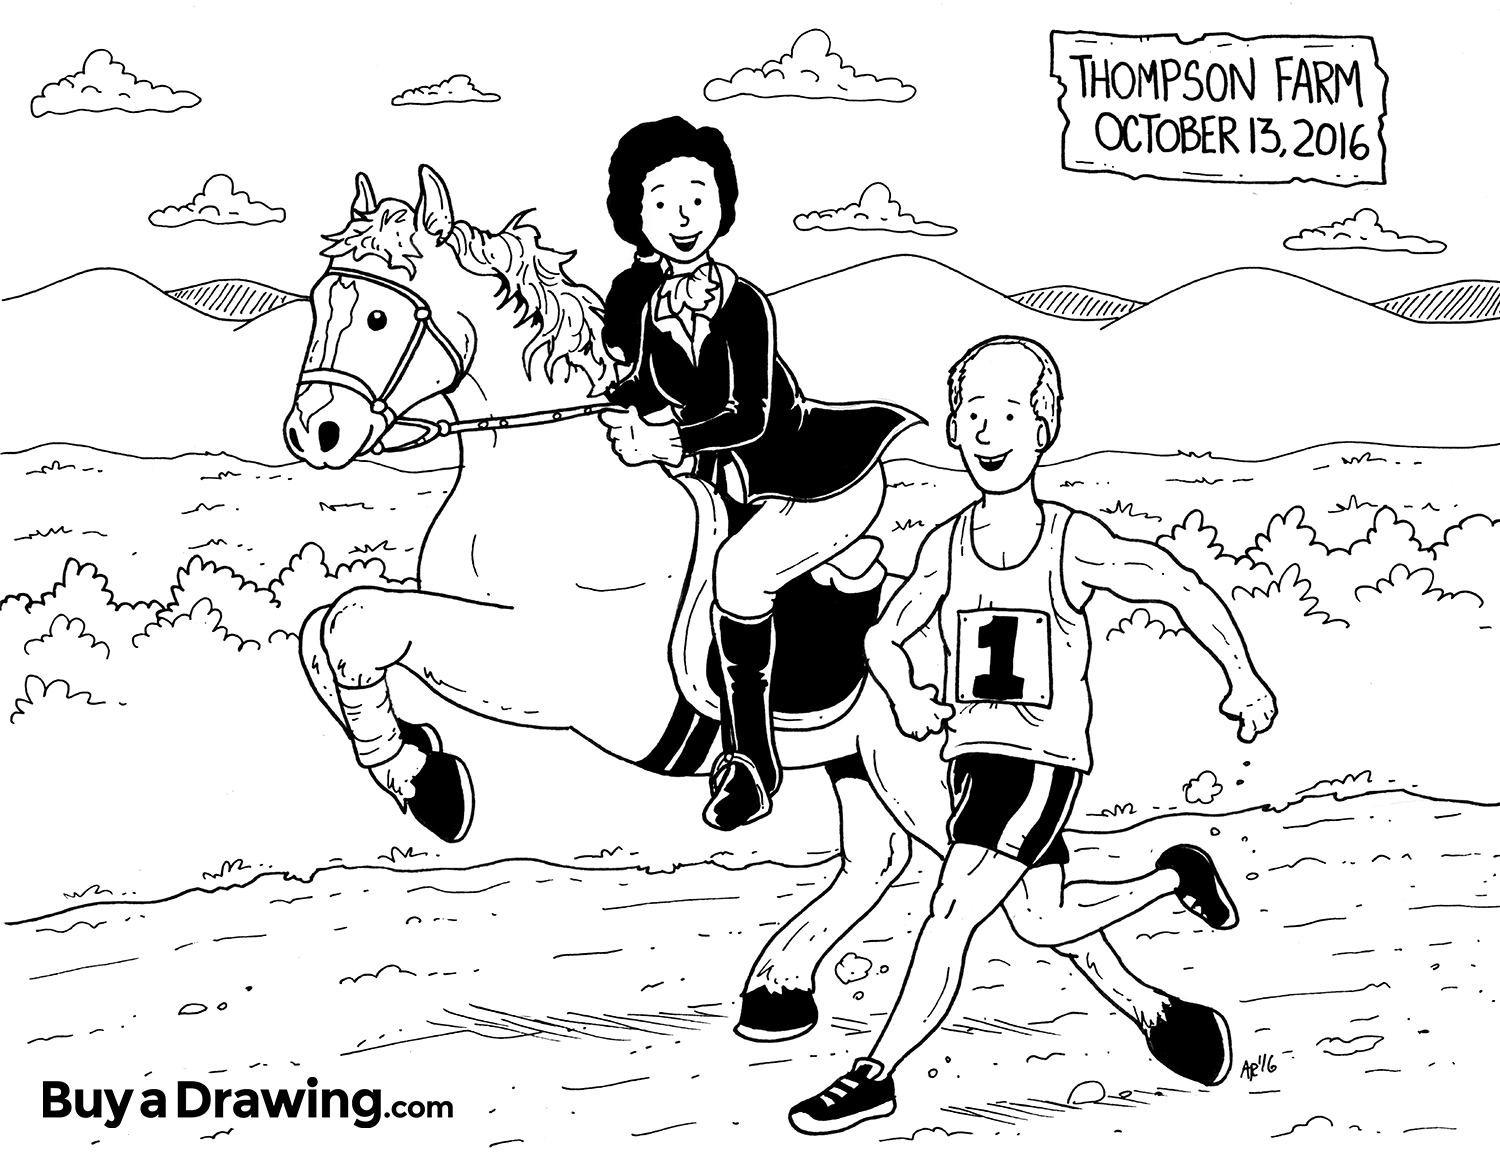 Wedding Gift Drawing - Horse Rider & Marathon Runner Cartoon